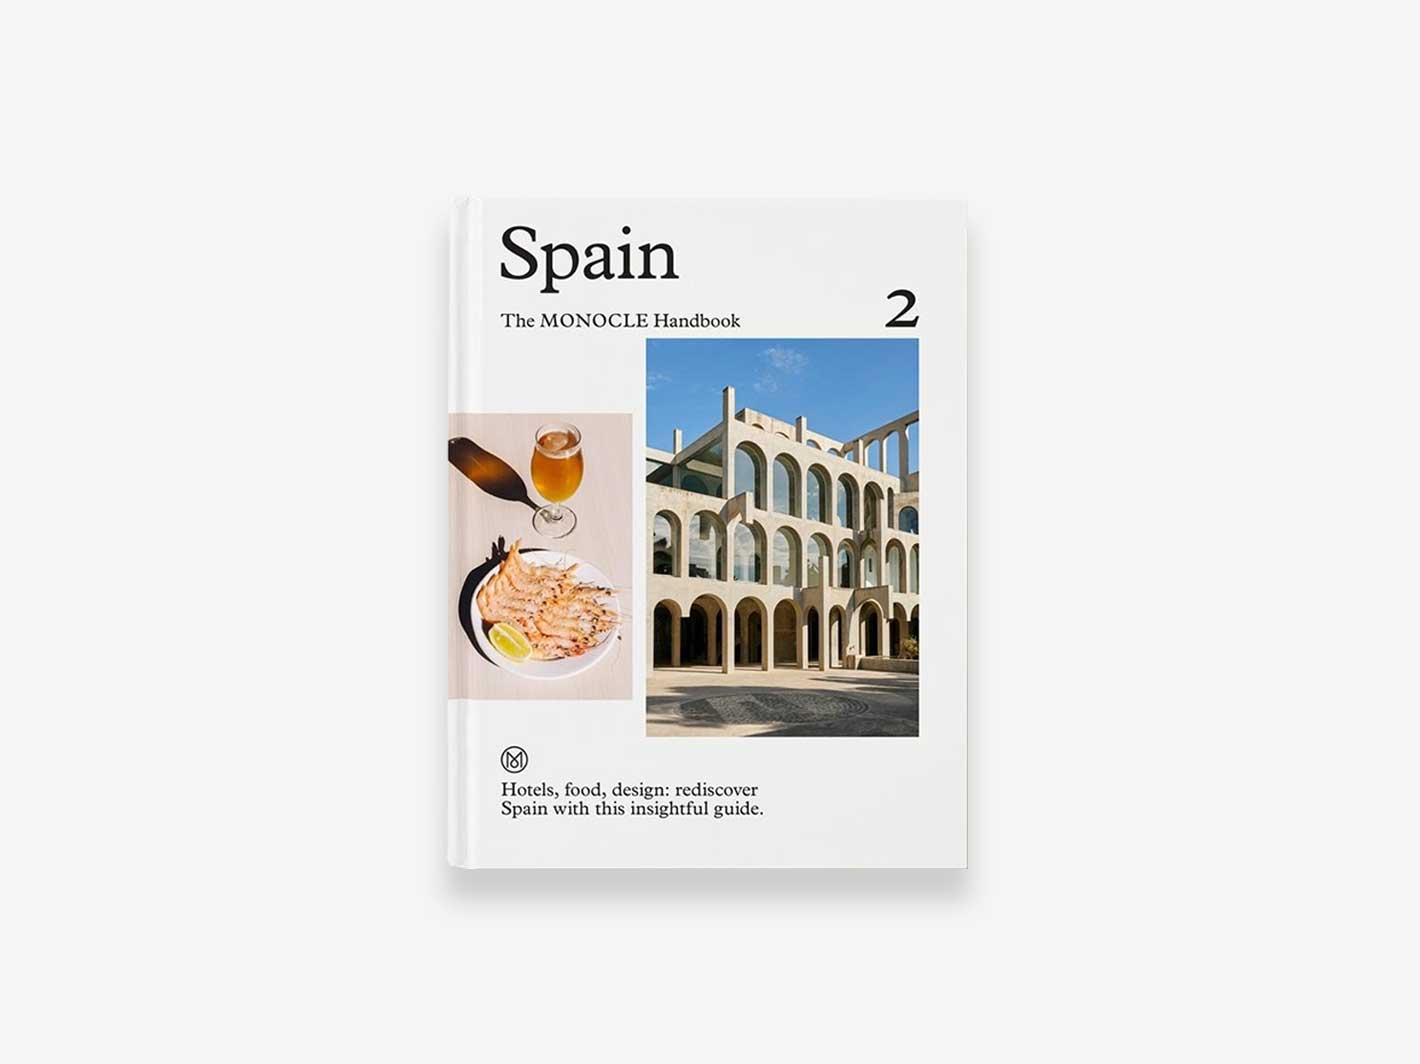 The Monocle Handbook: Spain